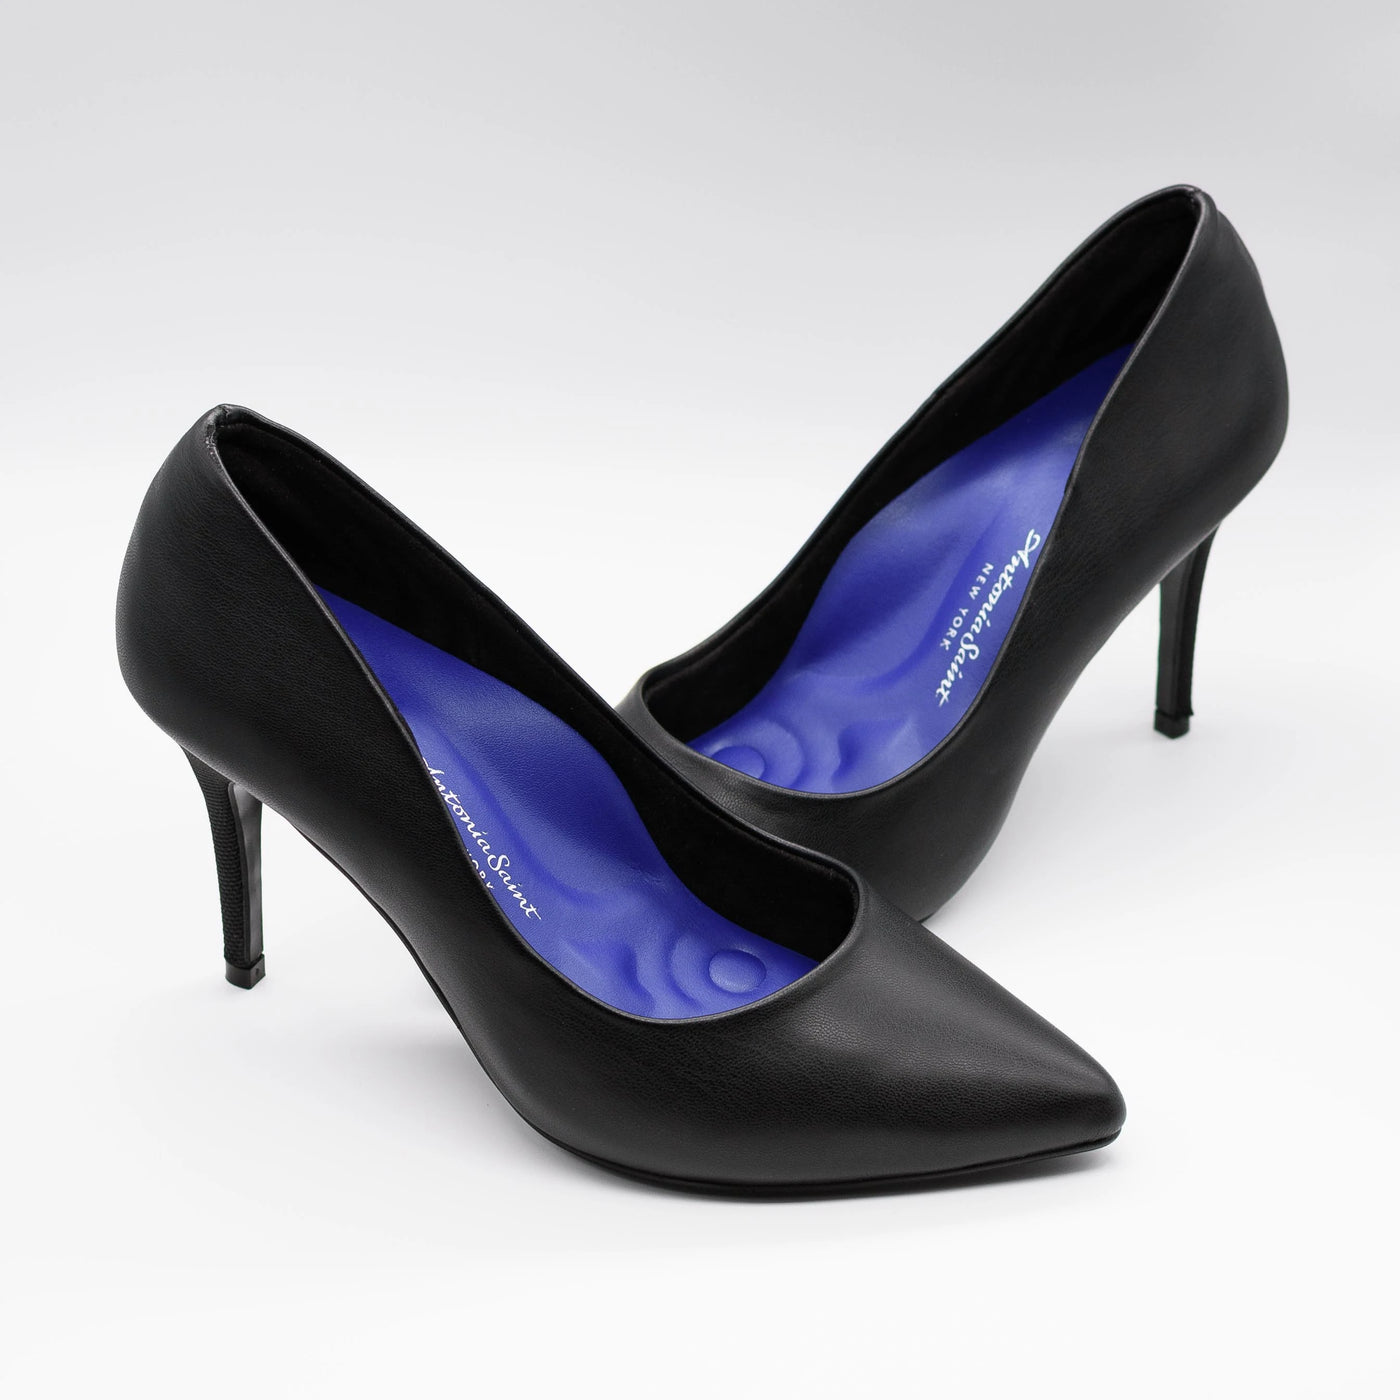 Leather Heels, High Heels, Women High Heels - Antonia Saint NY